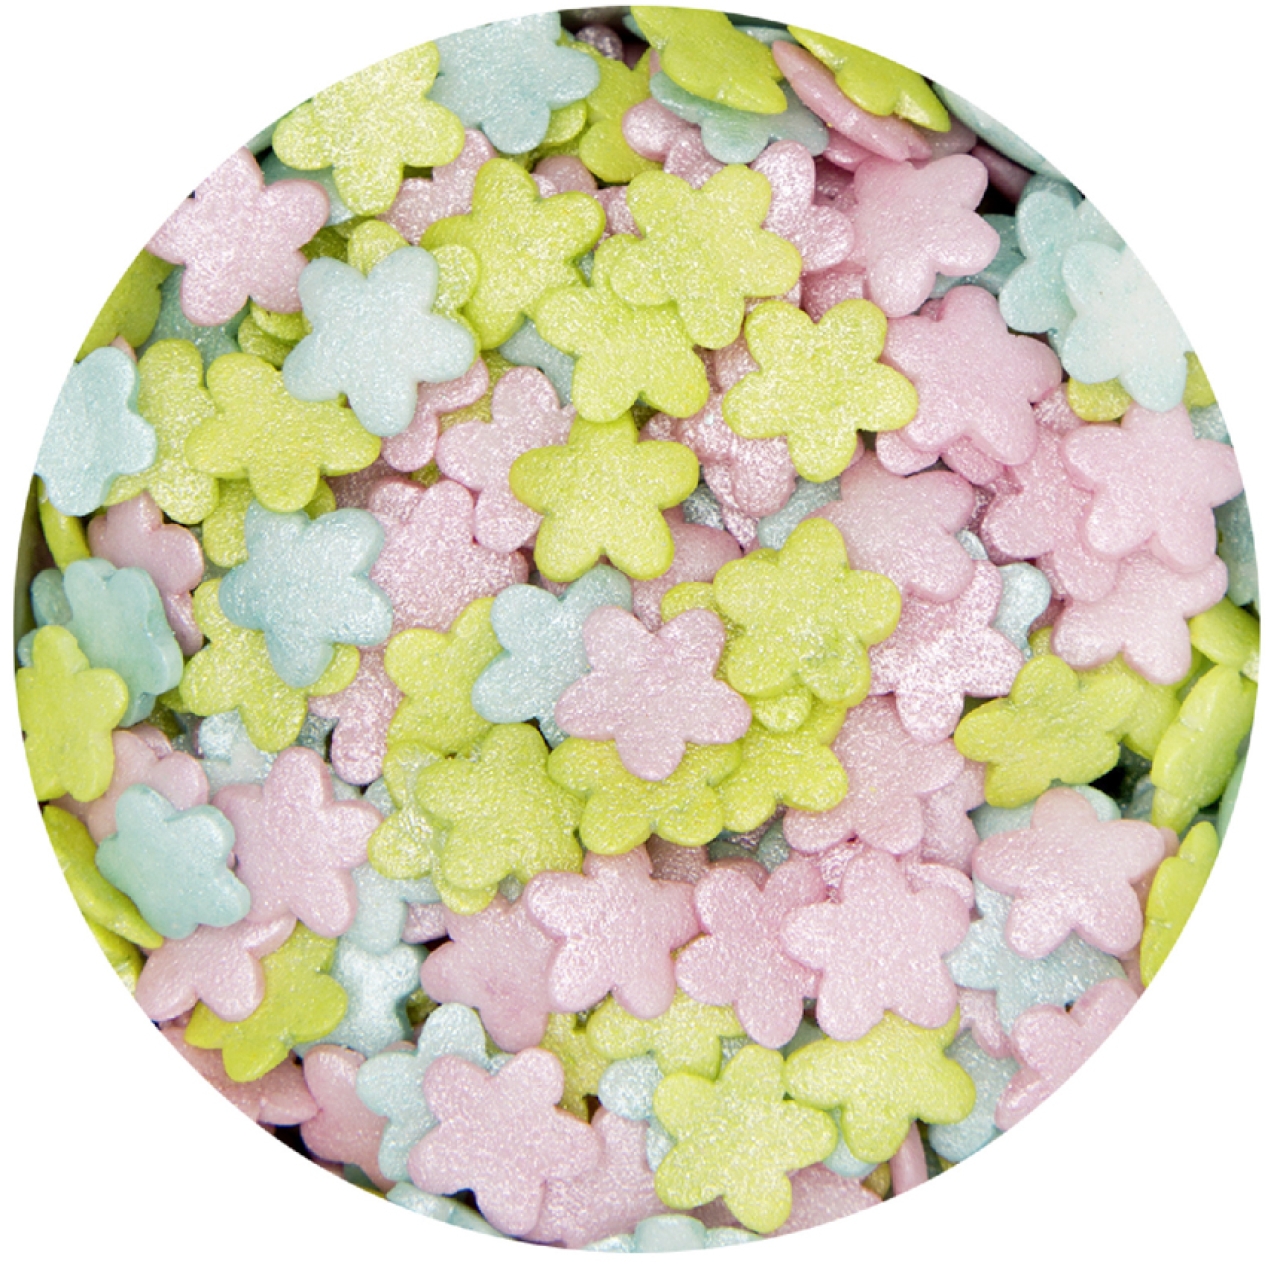 Azo-freies Streudekor "Blumen", Springtime-Farben: Rosa, Türkis, Grün, 45 g, Städter